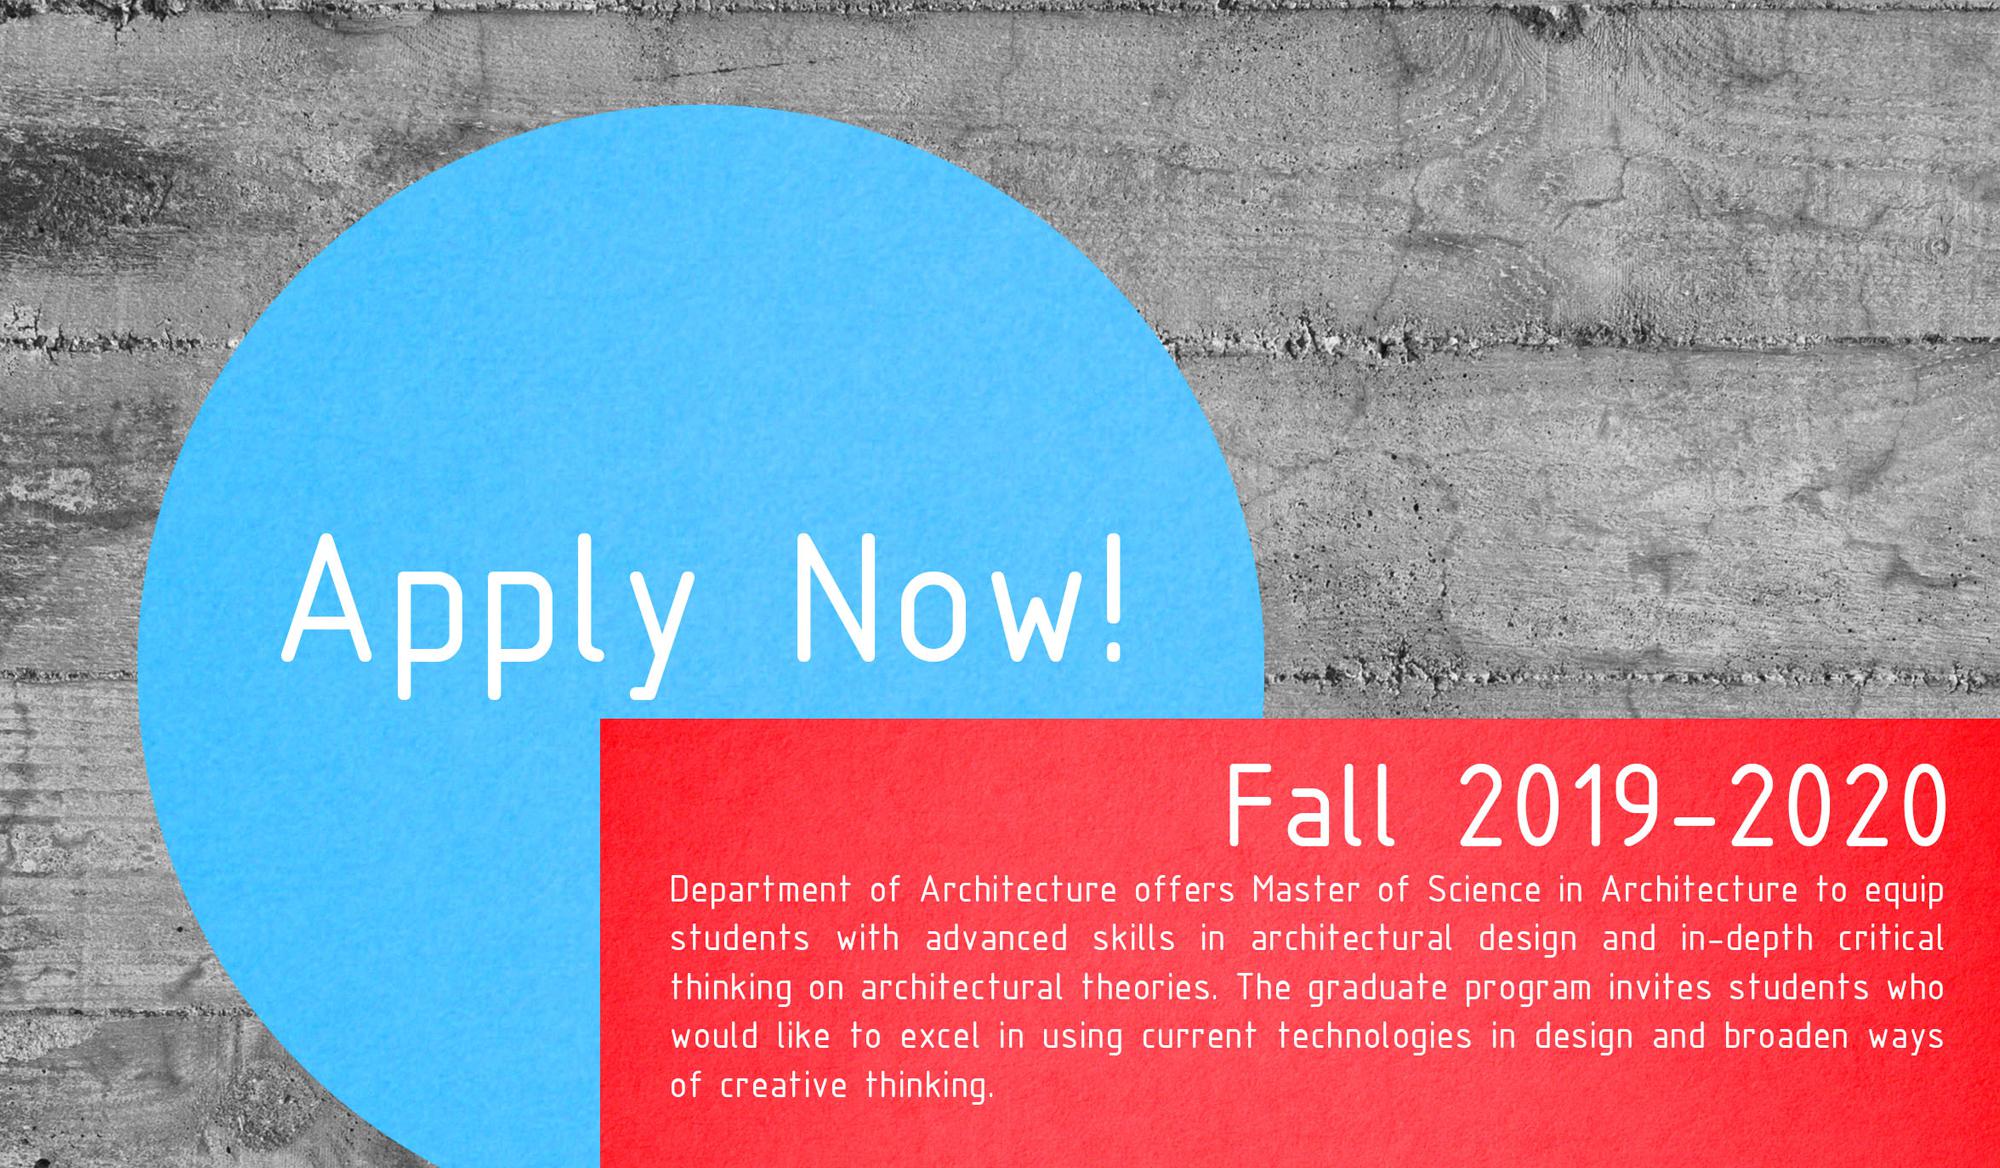 Graduate Studies in Architecture Applications